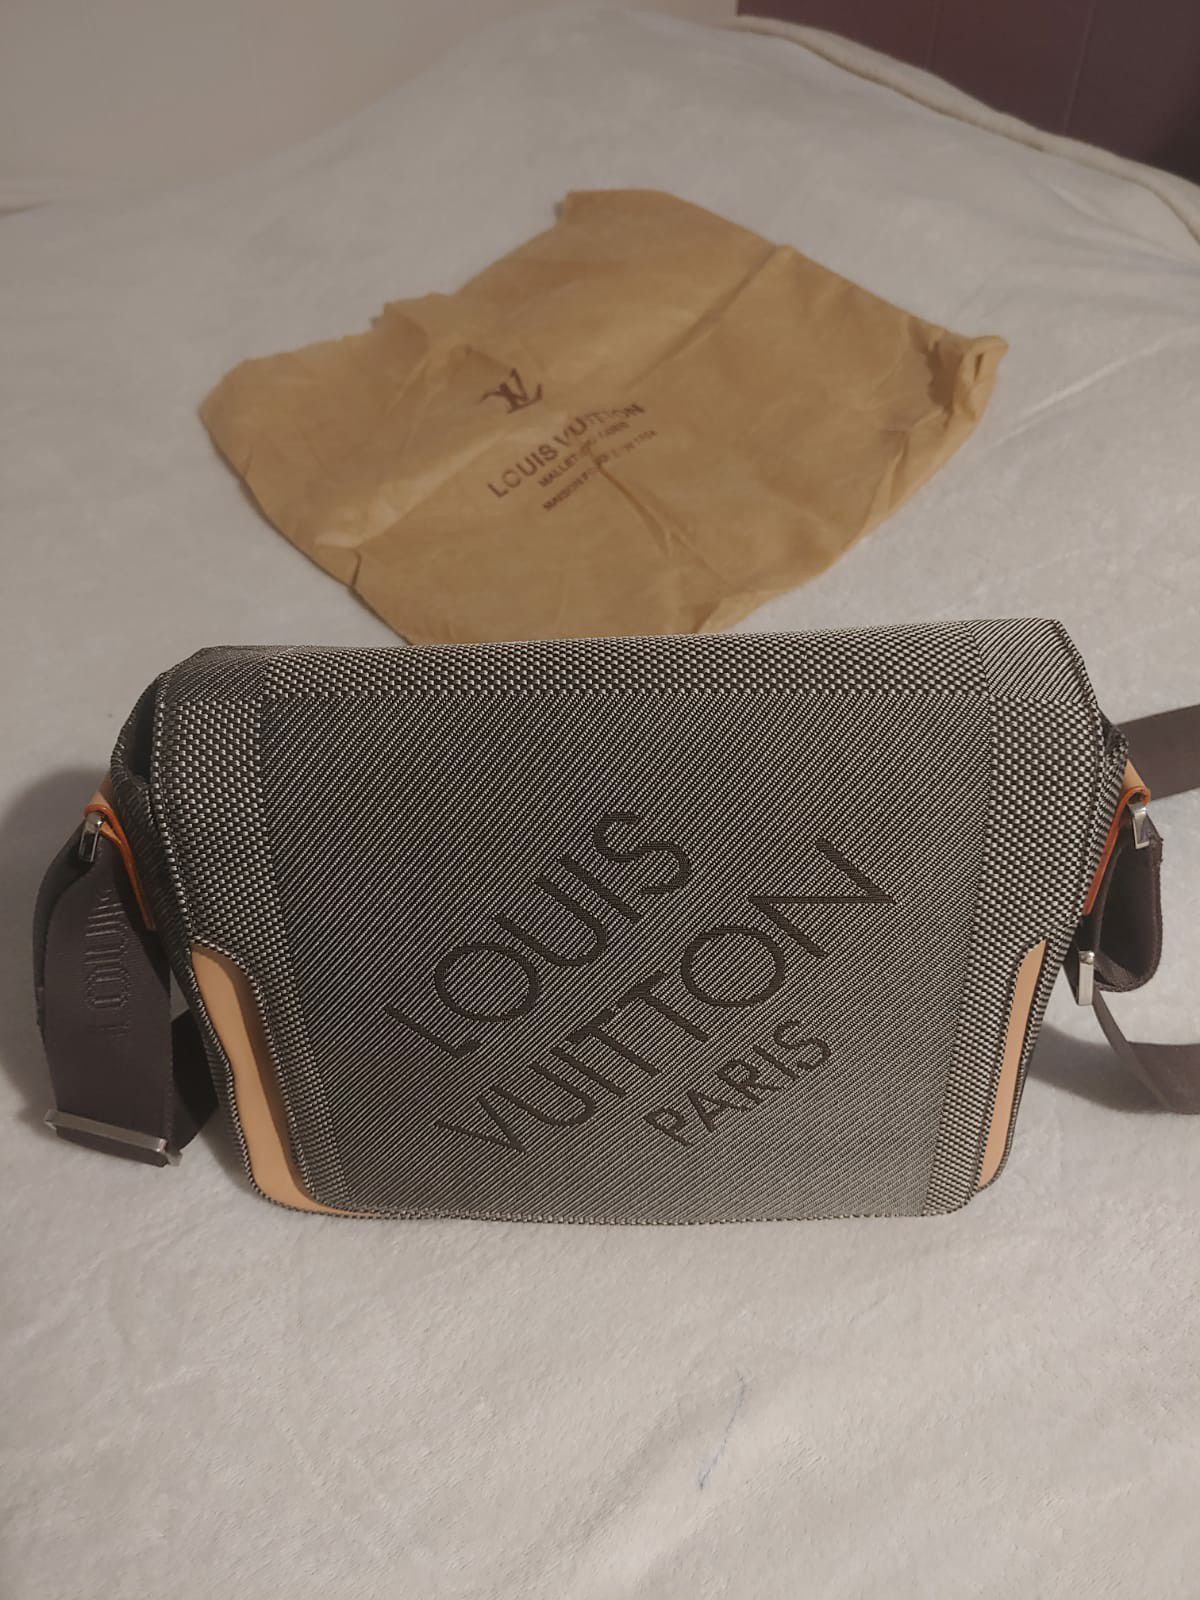 Louis vuitton wallet/bag